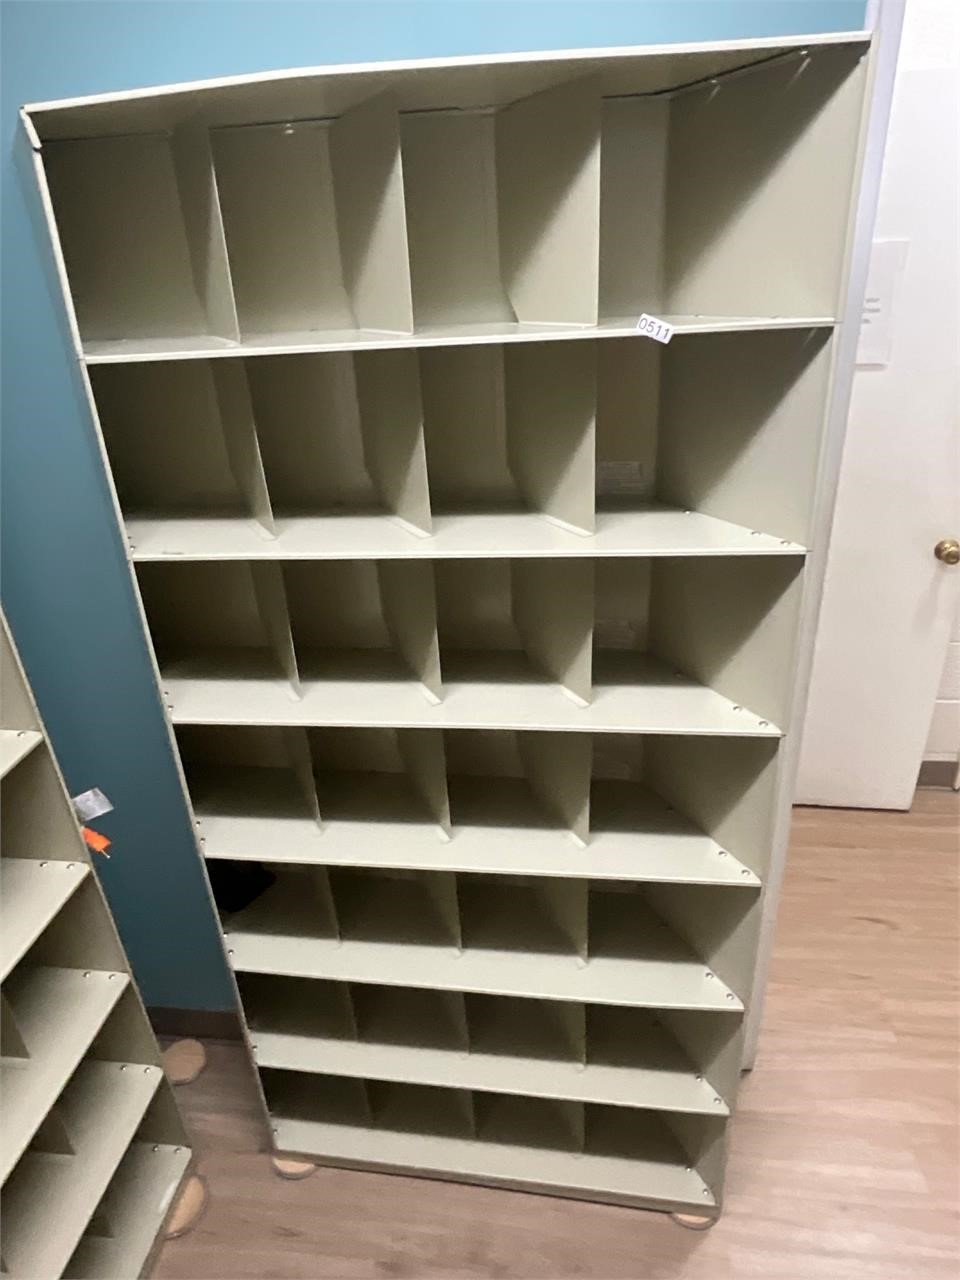 28 cubical metal shelf- made for a corner